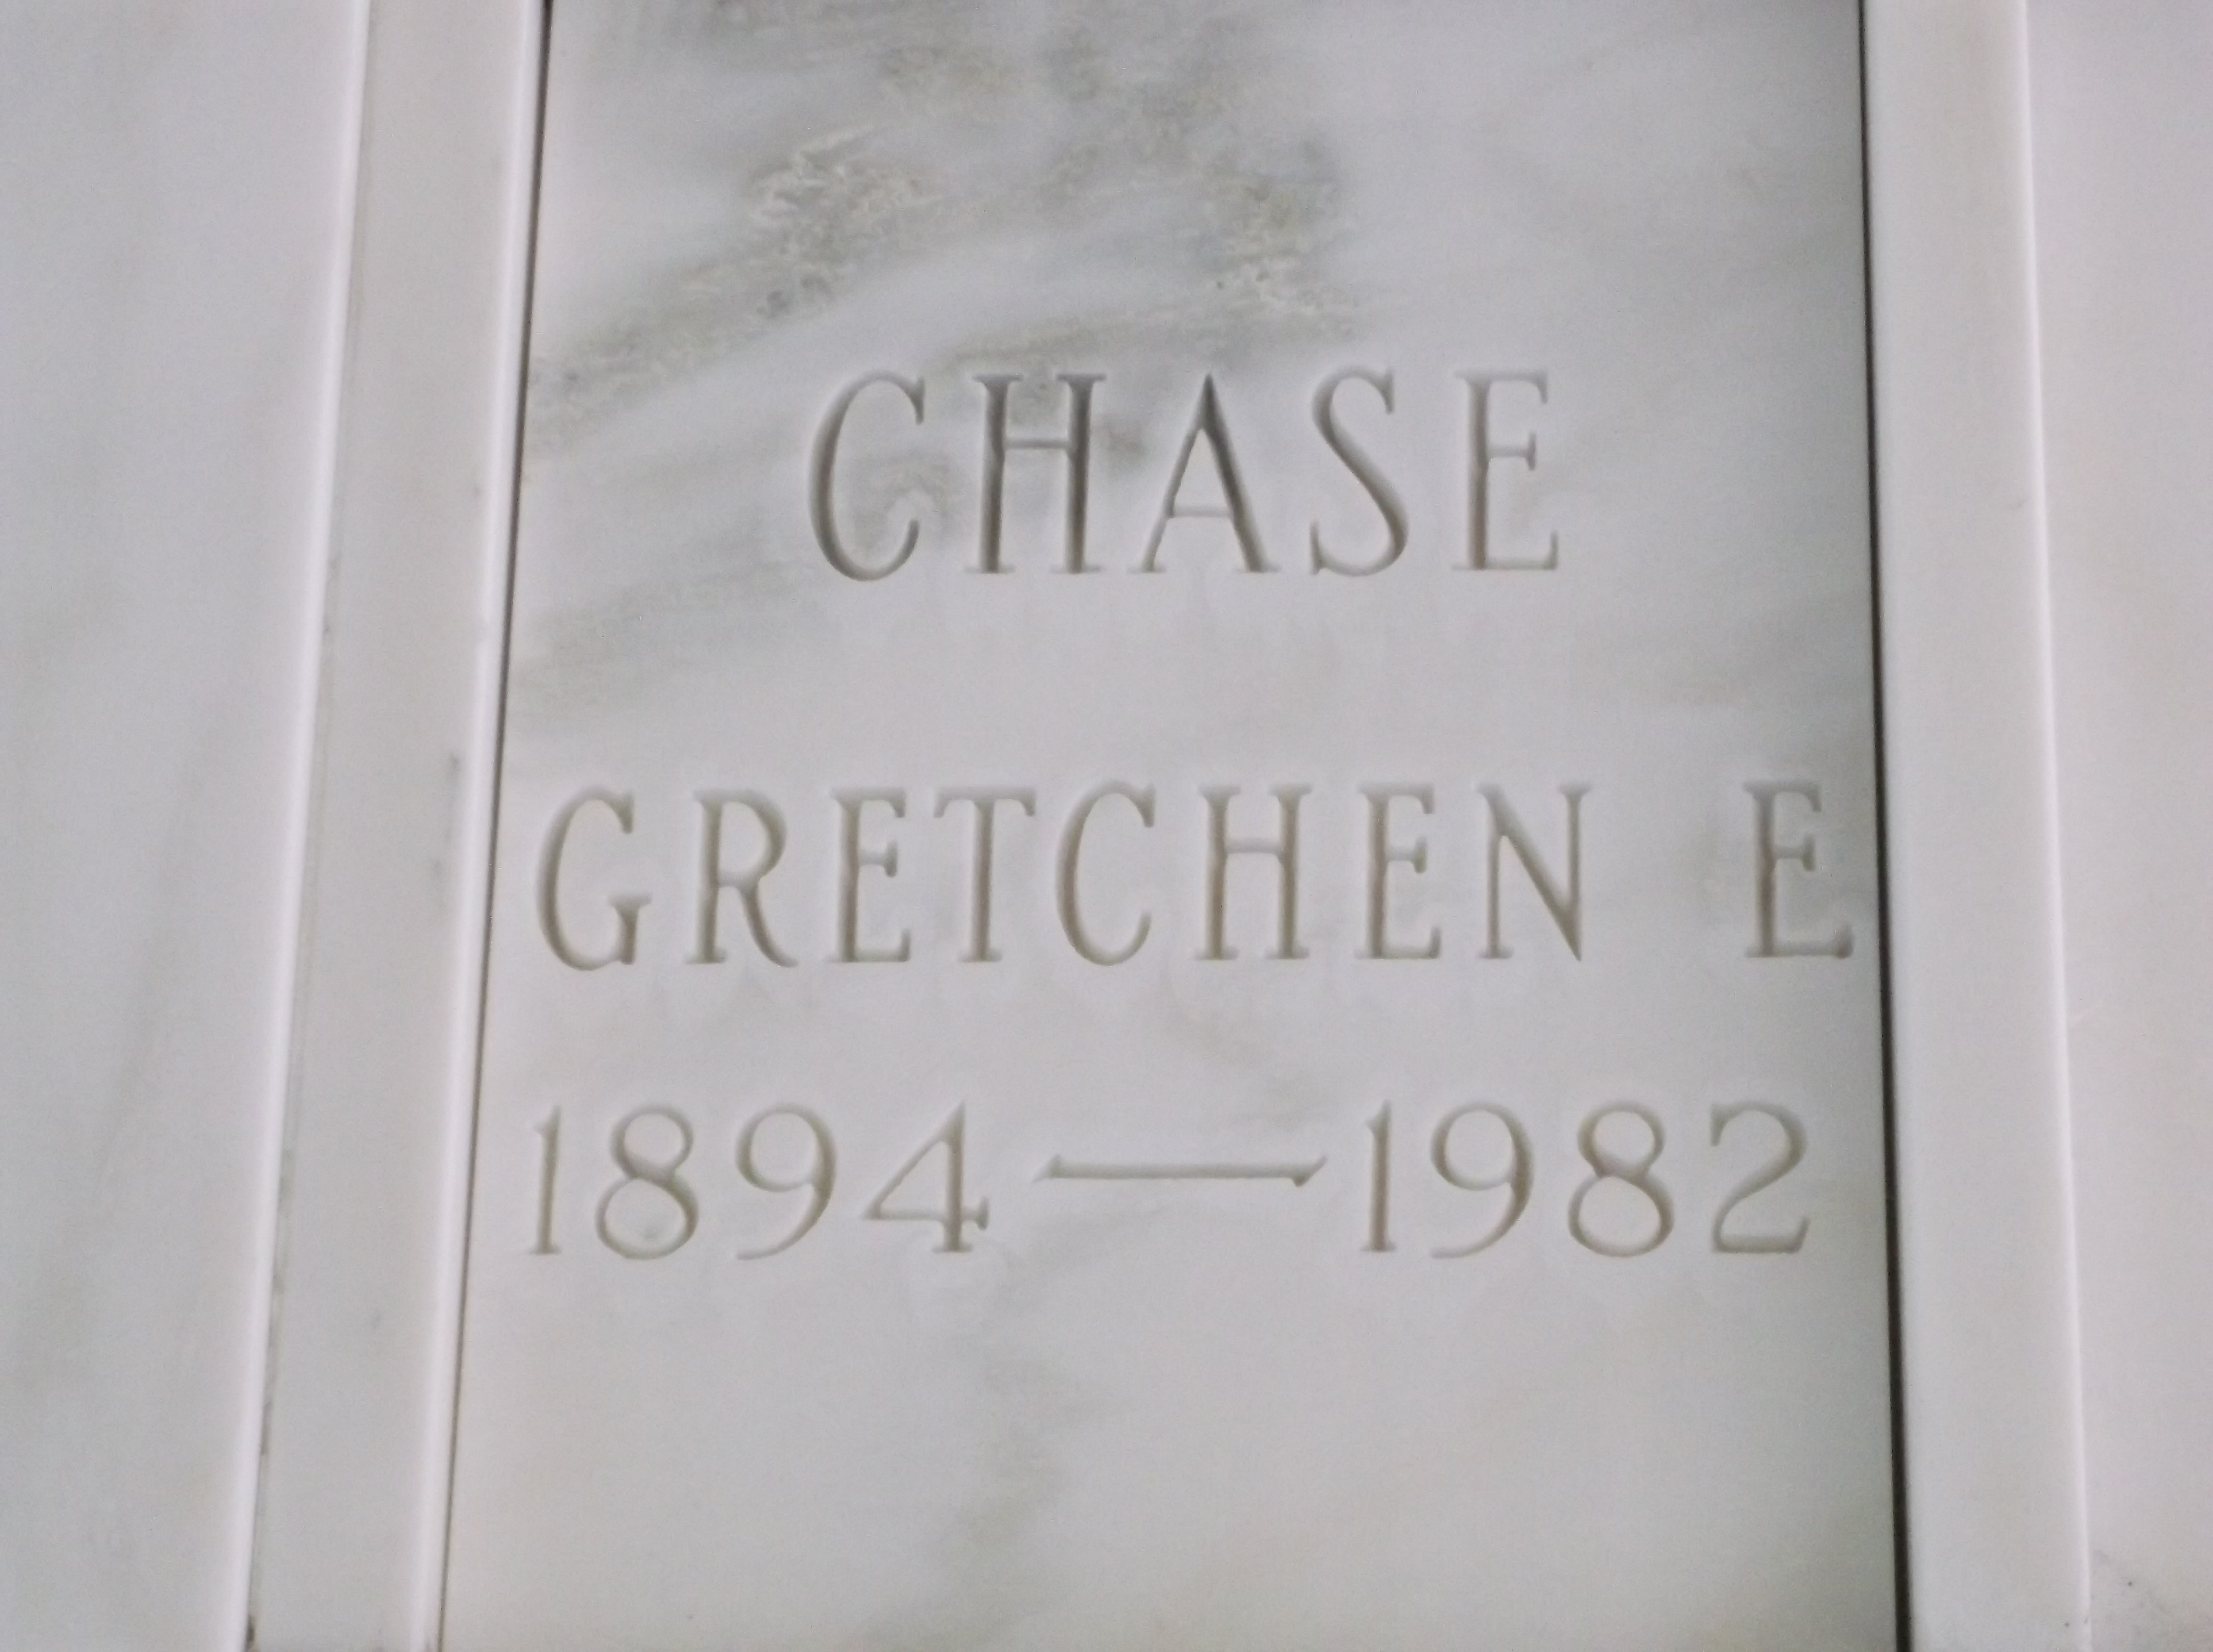 Gretchen E Chase